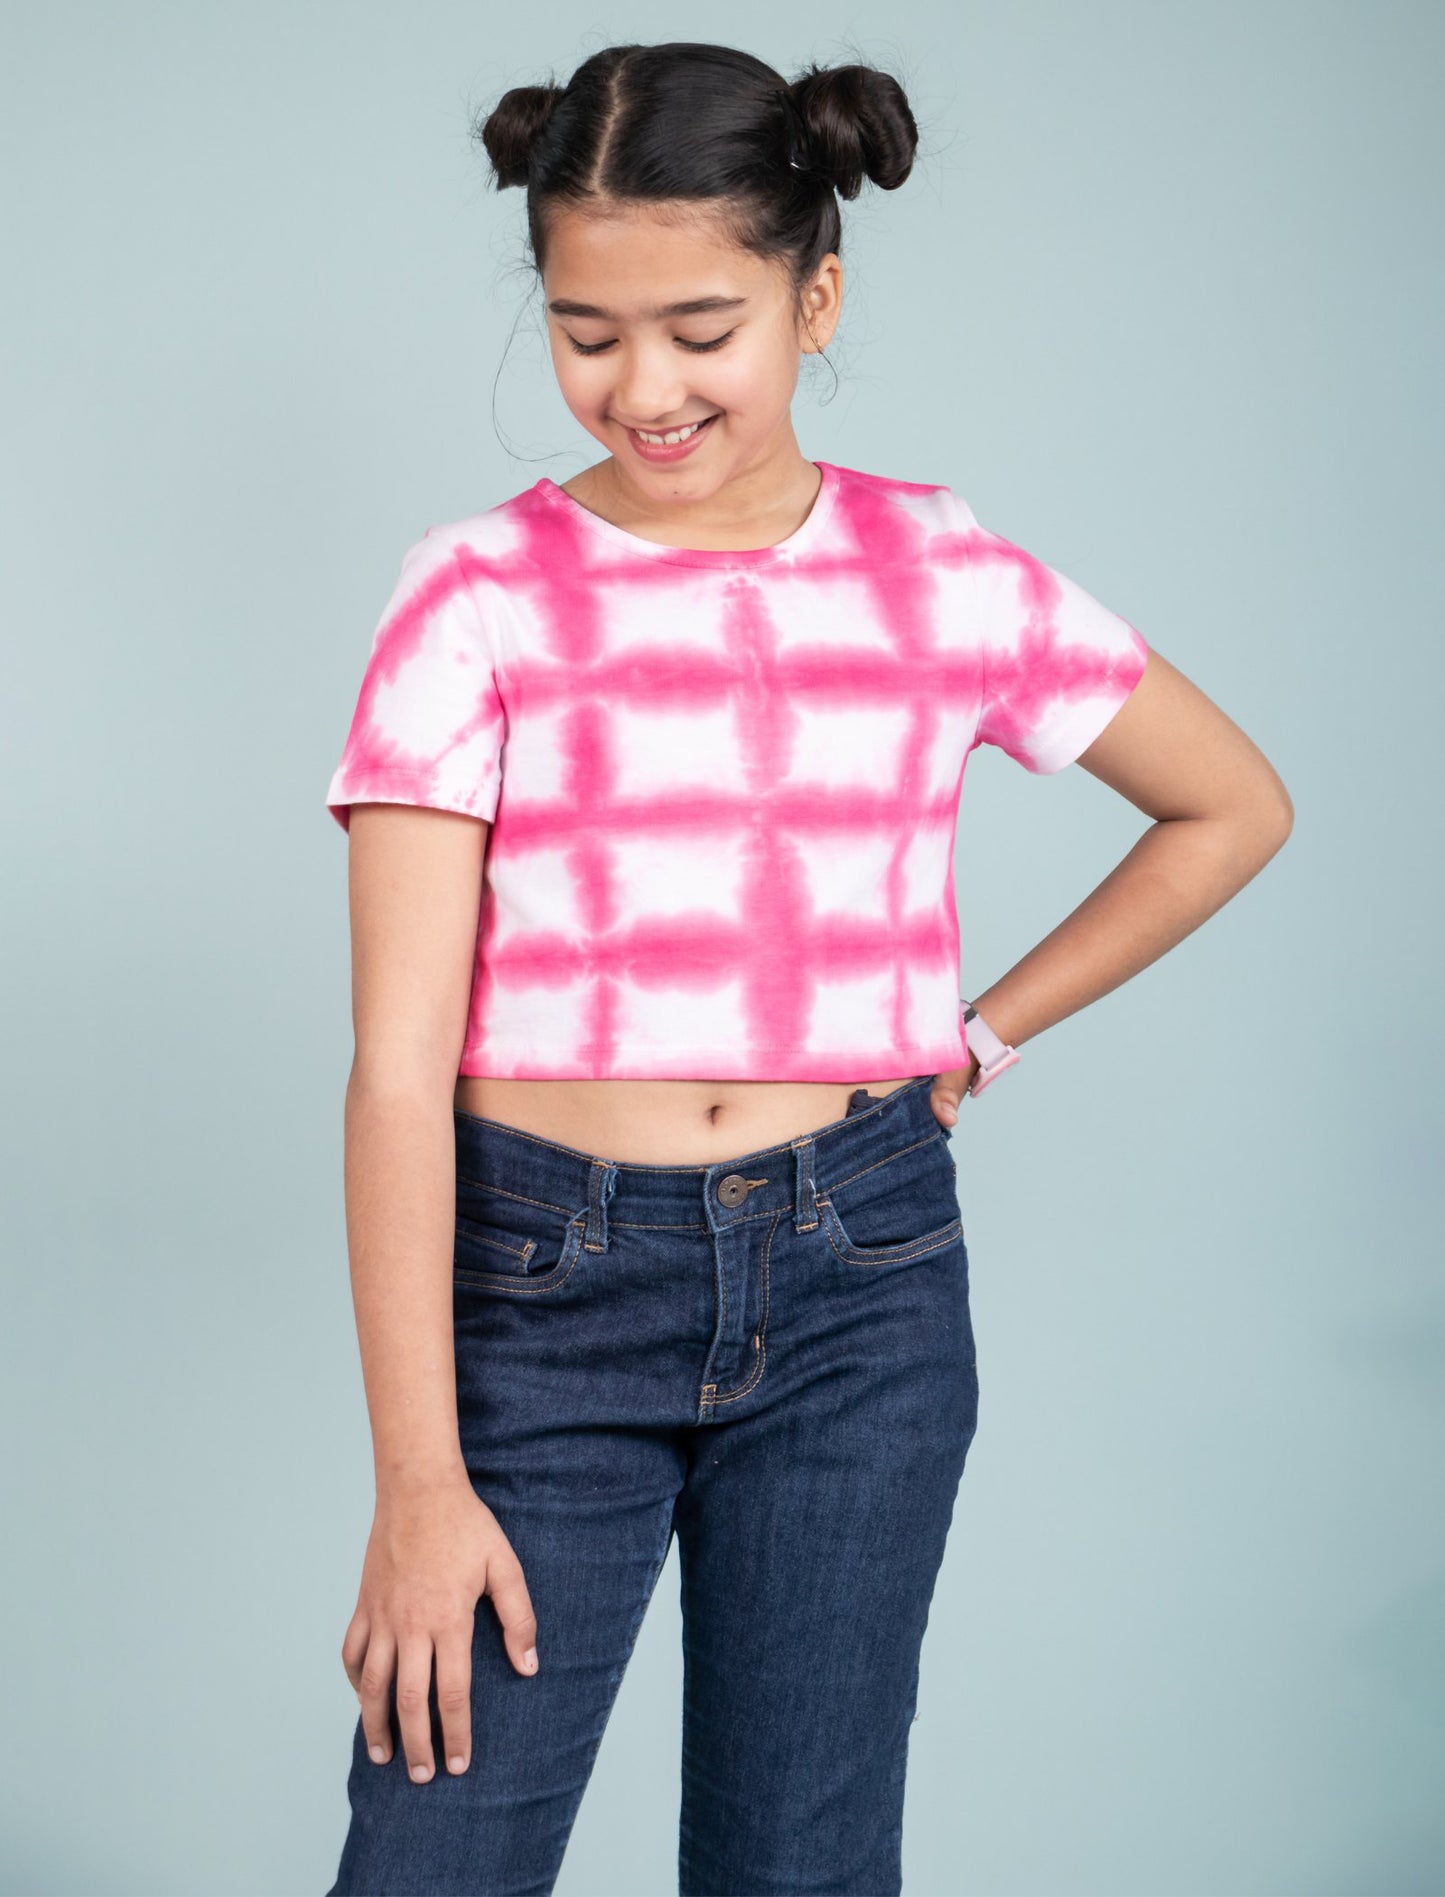 Girls Kids Tie-Dye Cotton Summer Crop Top T-Shirt (Fuchsia Pink)